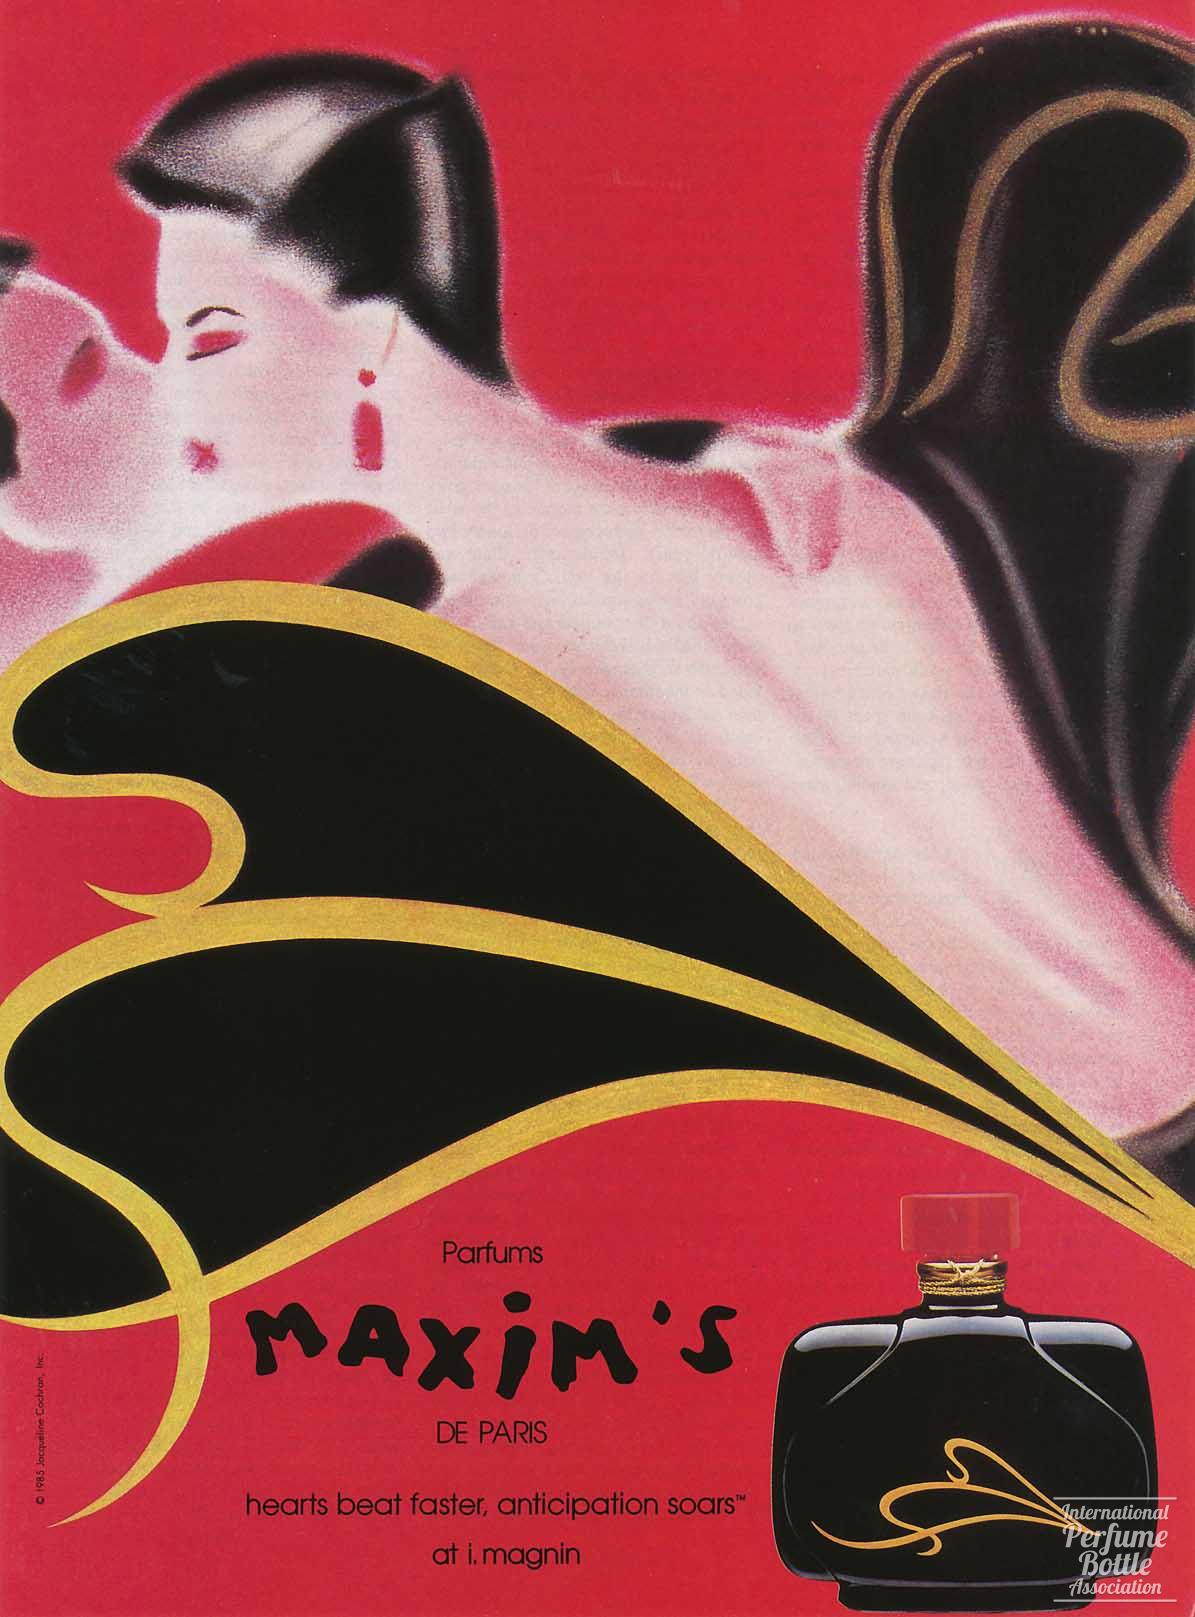 “Maxim’s de Paris” by Maxim Advertisement - 1986